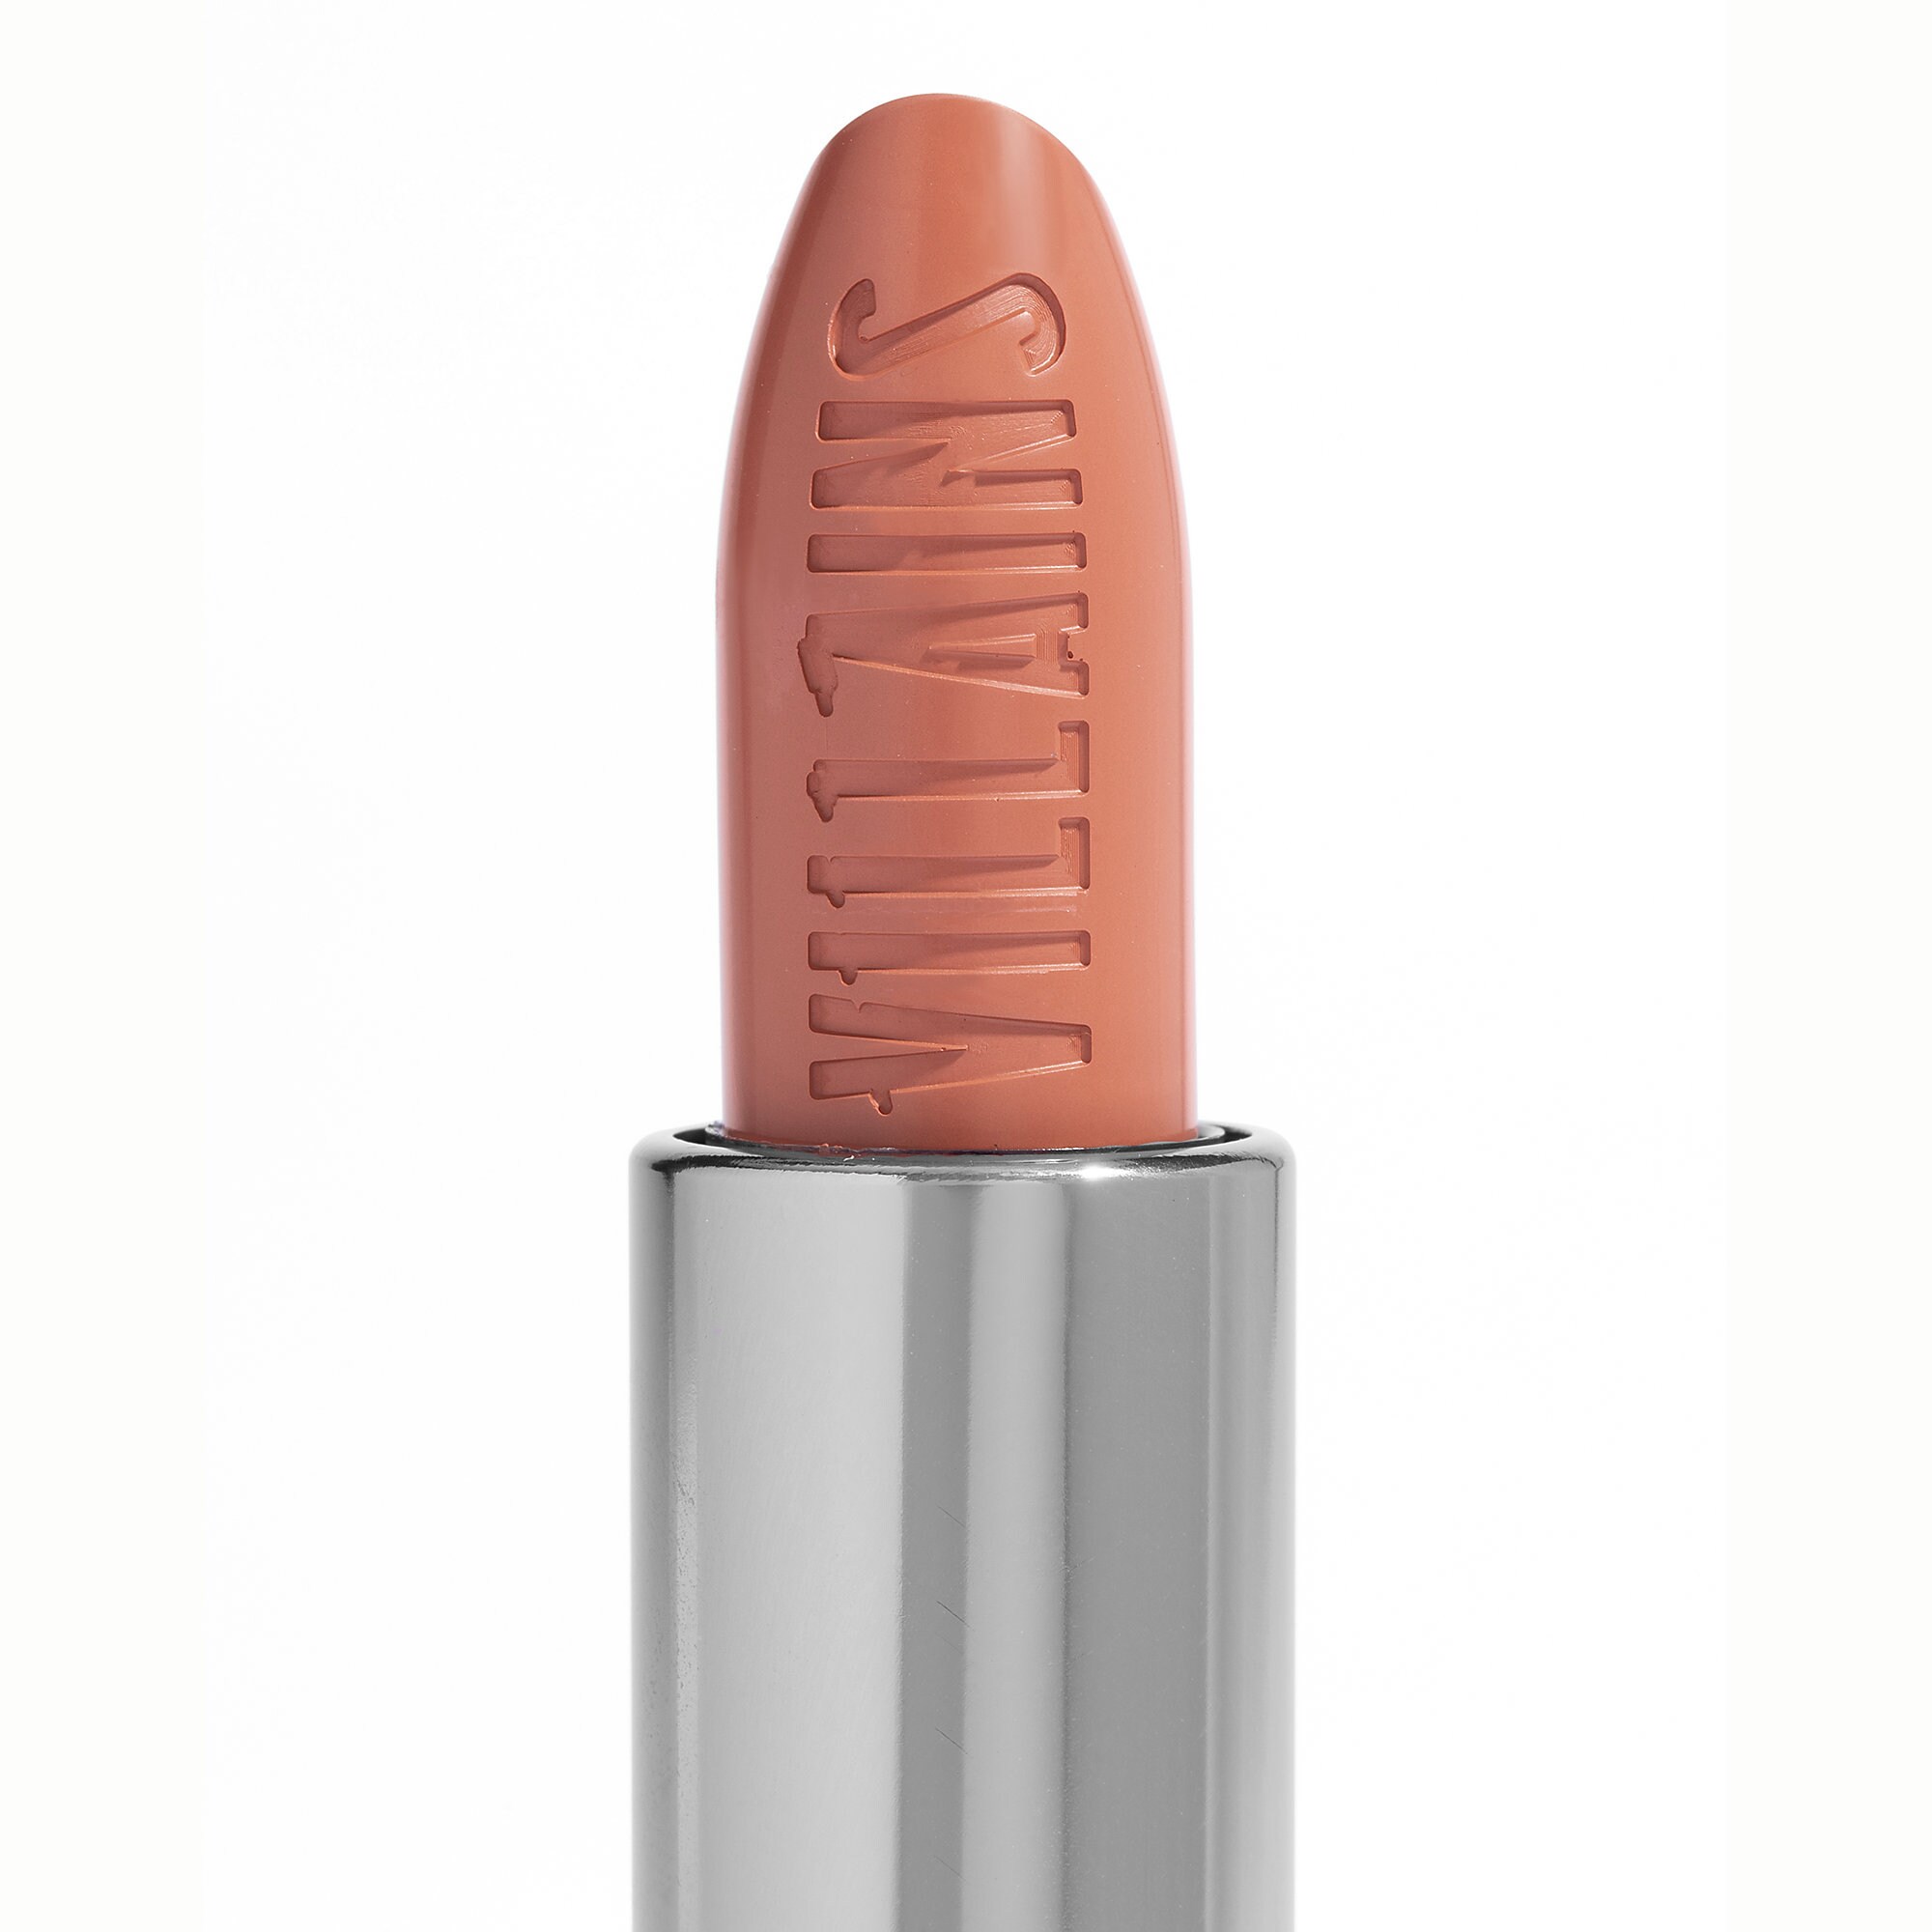 Hades Lux Lipstick by ColourPop - Creme